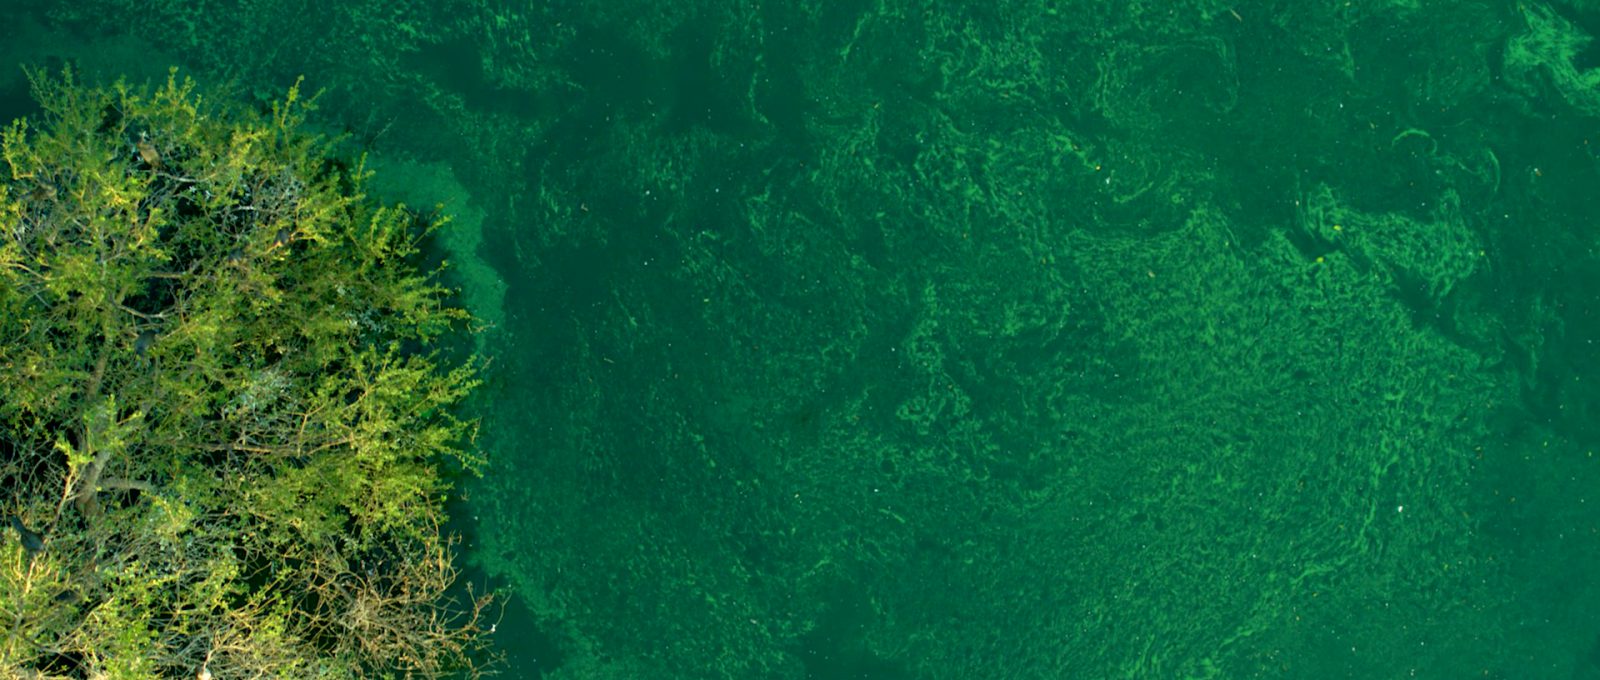 toxic algae - blue green - pond and lake management - cyanobacteria - nutrient overload